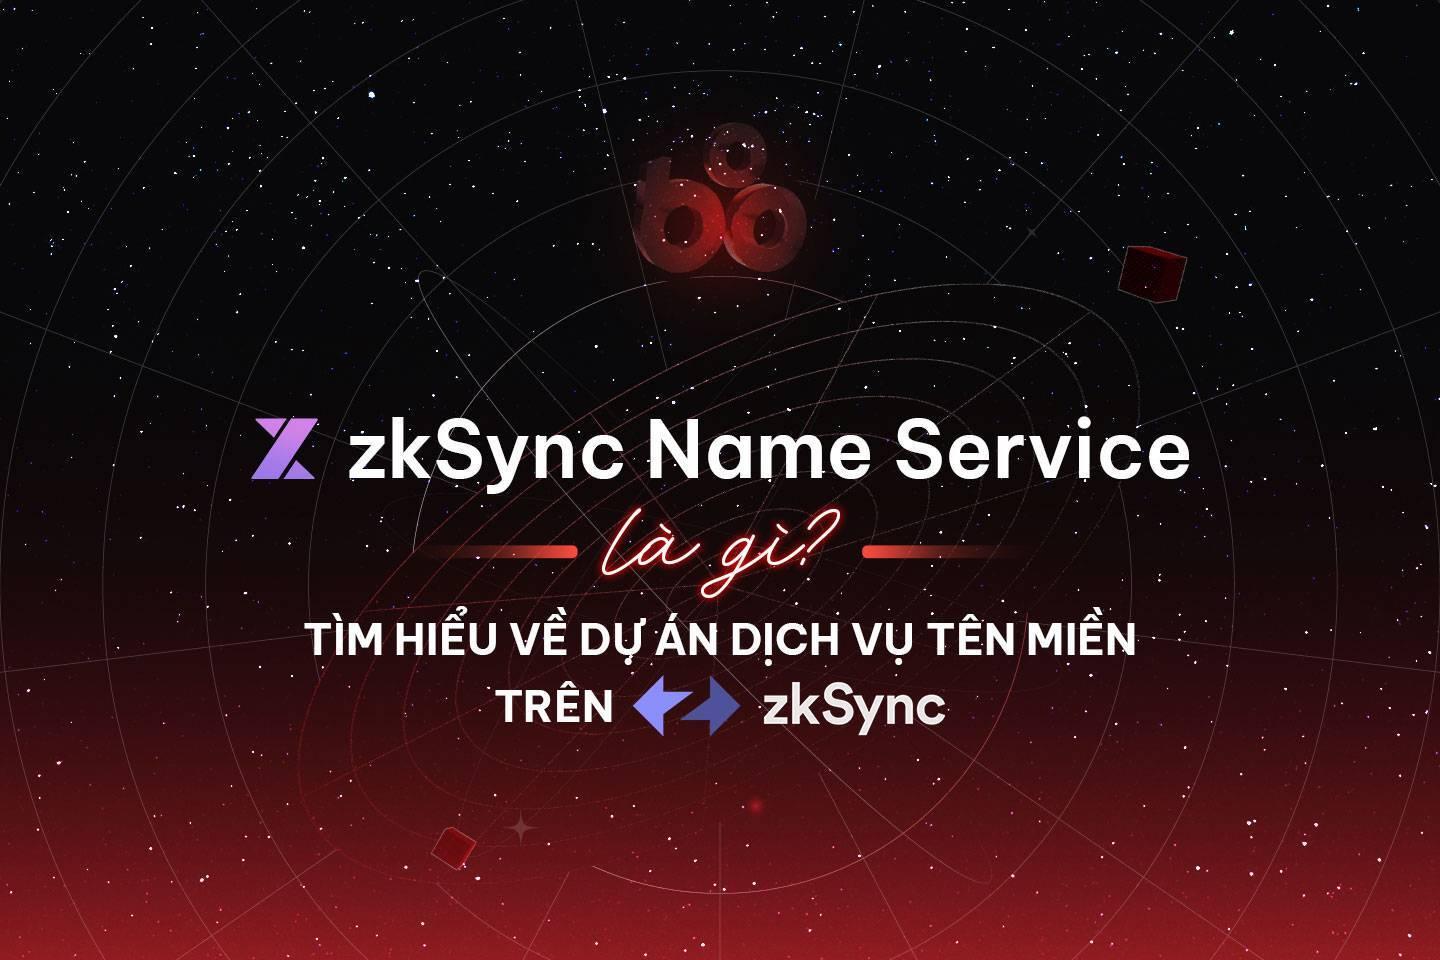 zksync-name-service-la-gi-tim-hieu-ve-du-an-dich-vu-ten-mien-tren-zksync